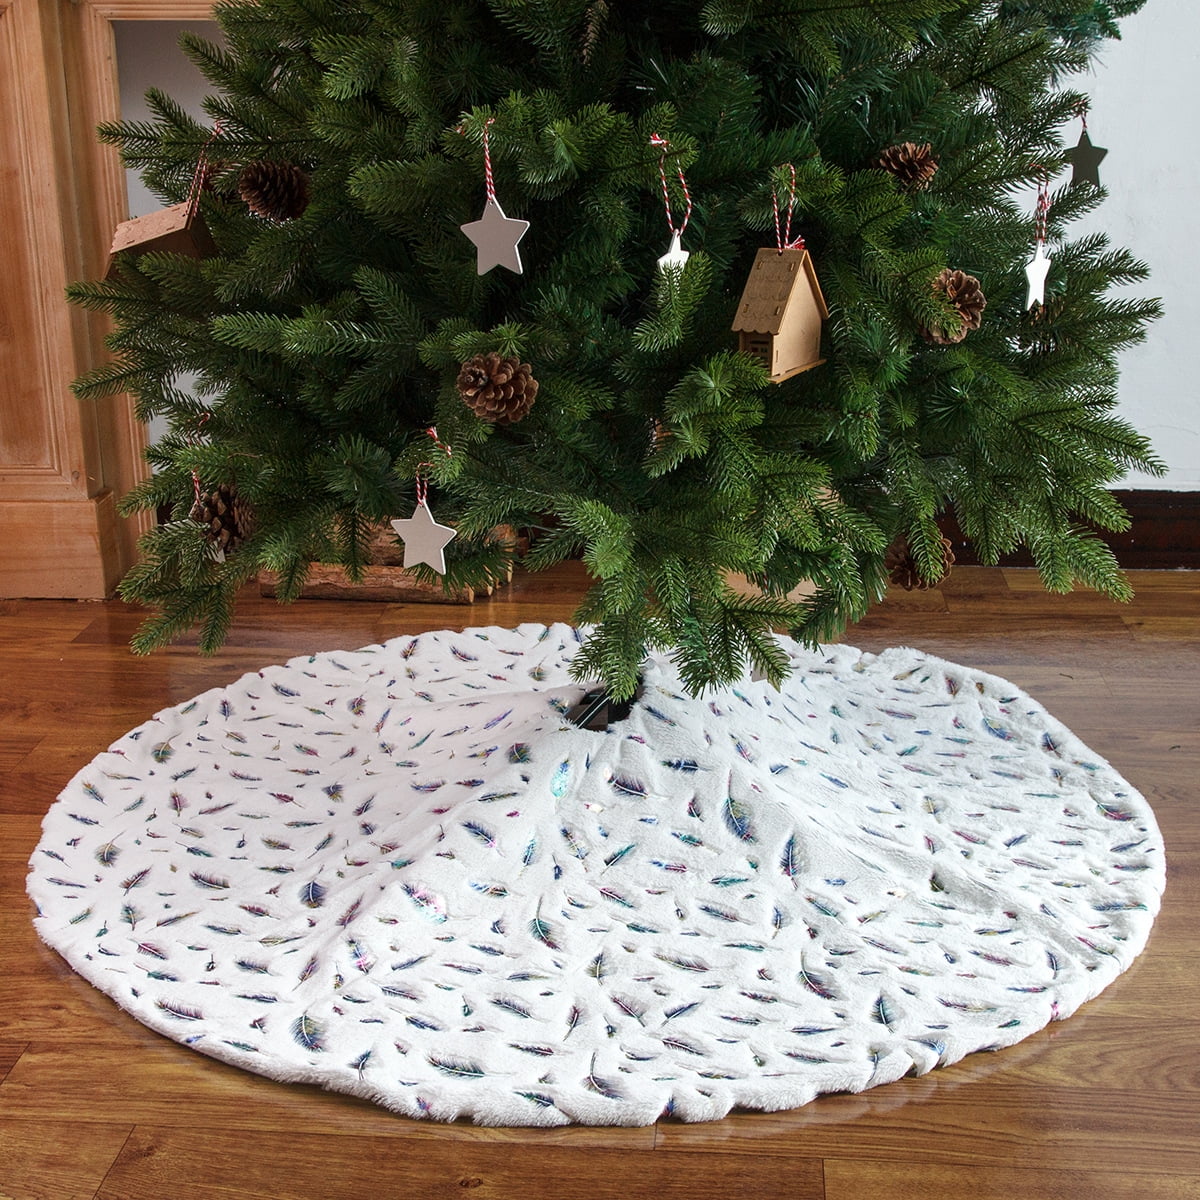 Anyingkai Christmas Tree Skirt,Christmas Tree Skirt White,Christmas Tree Skirts,Fur Xmas Tree Skirt,White Fur Xmas Tree Skirt,Velvet Christmas Tree Skirt White snowflakes, 90cm